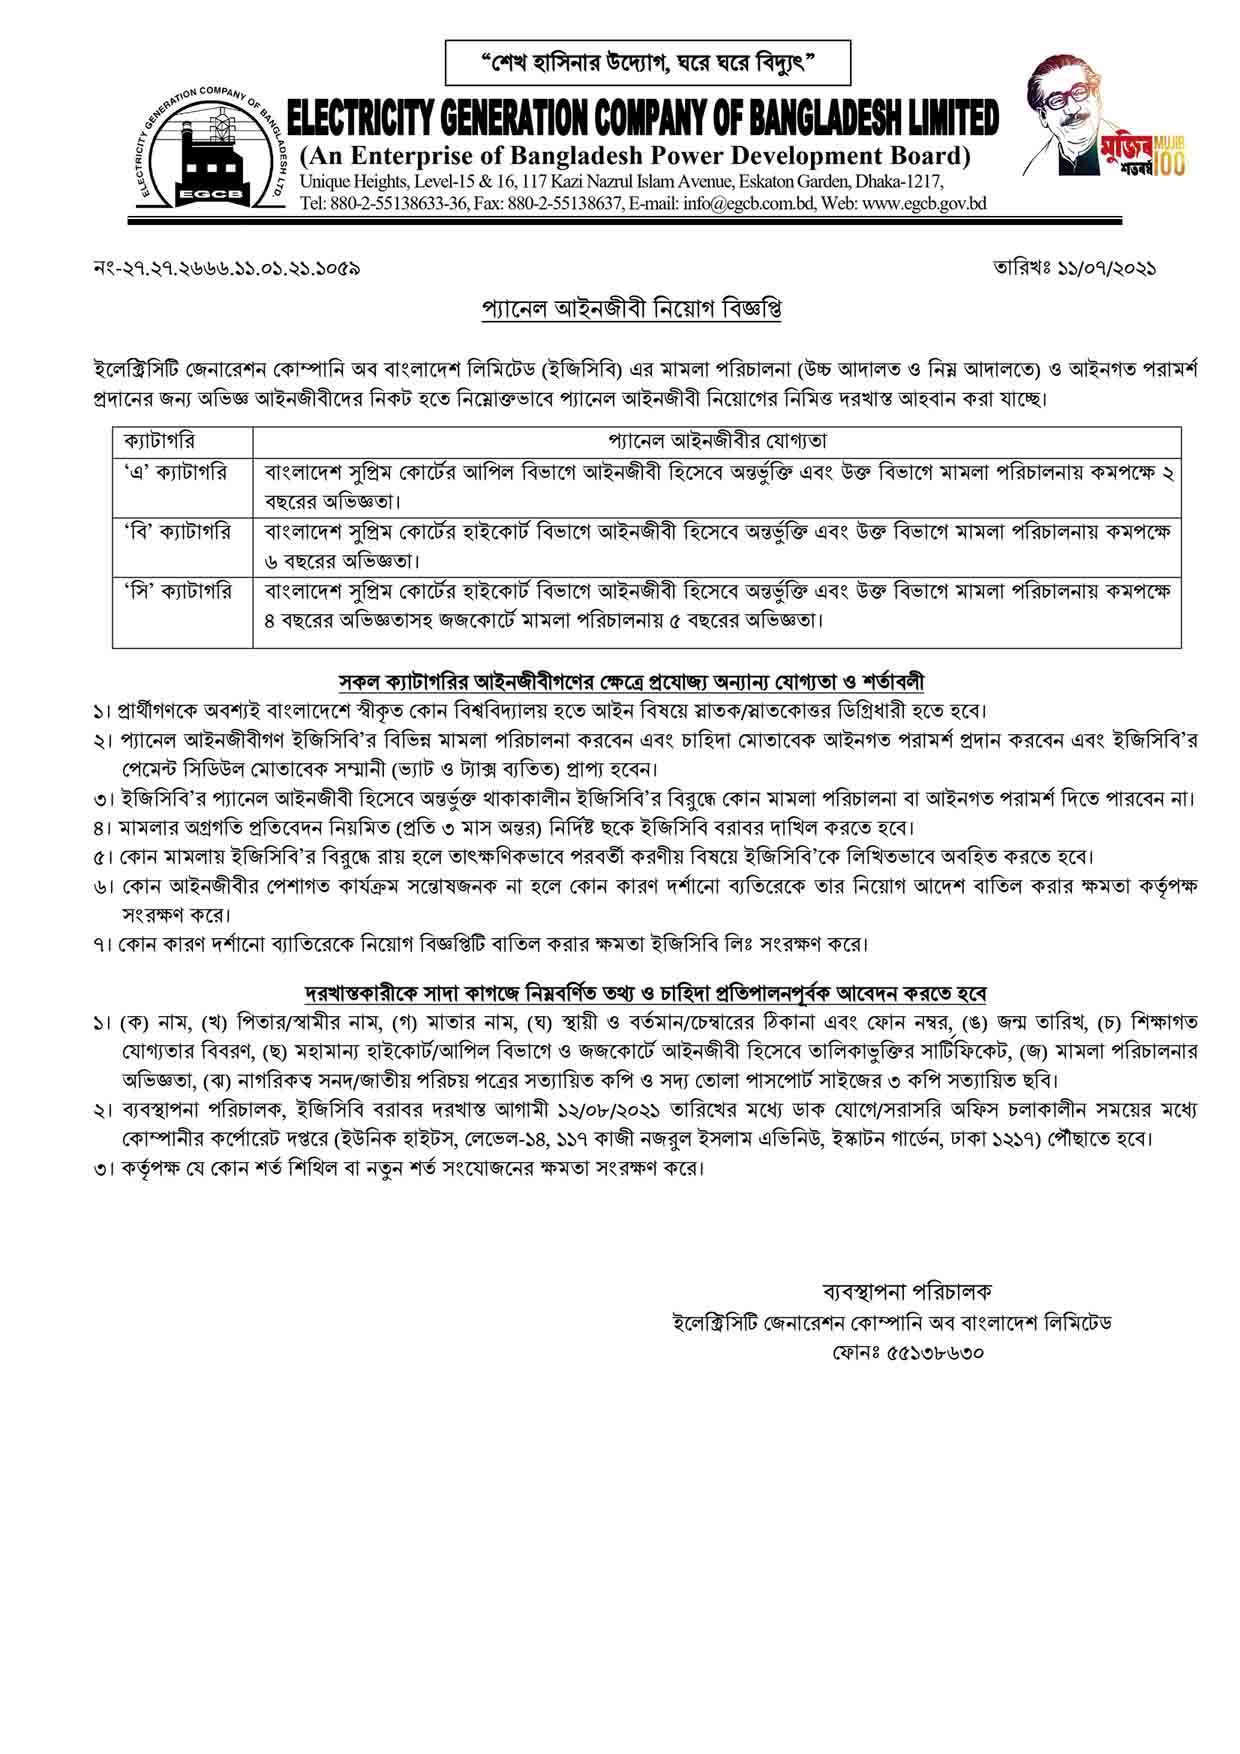 Electricity Generation Company Bangladesh Limited Job Circular 2021